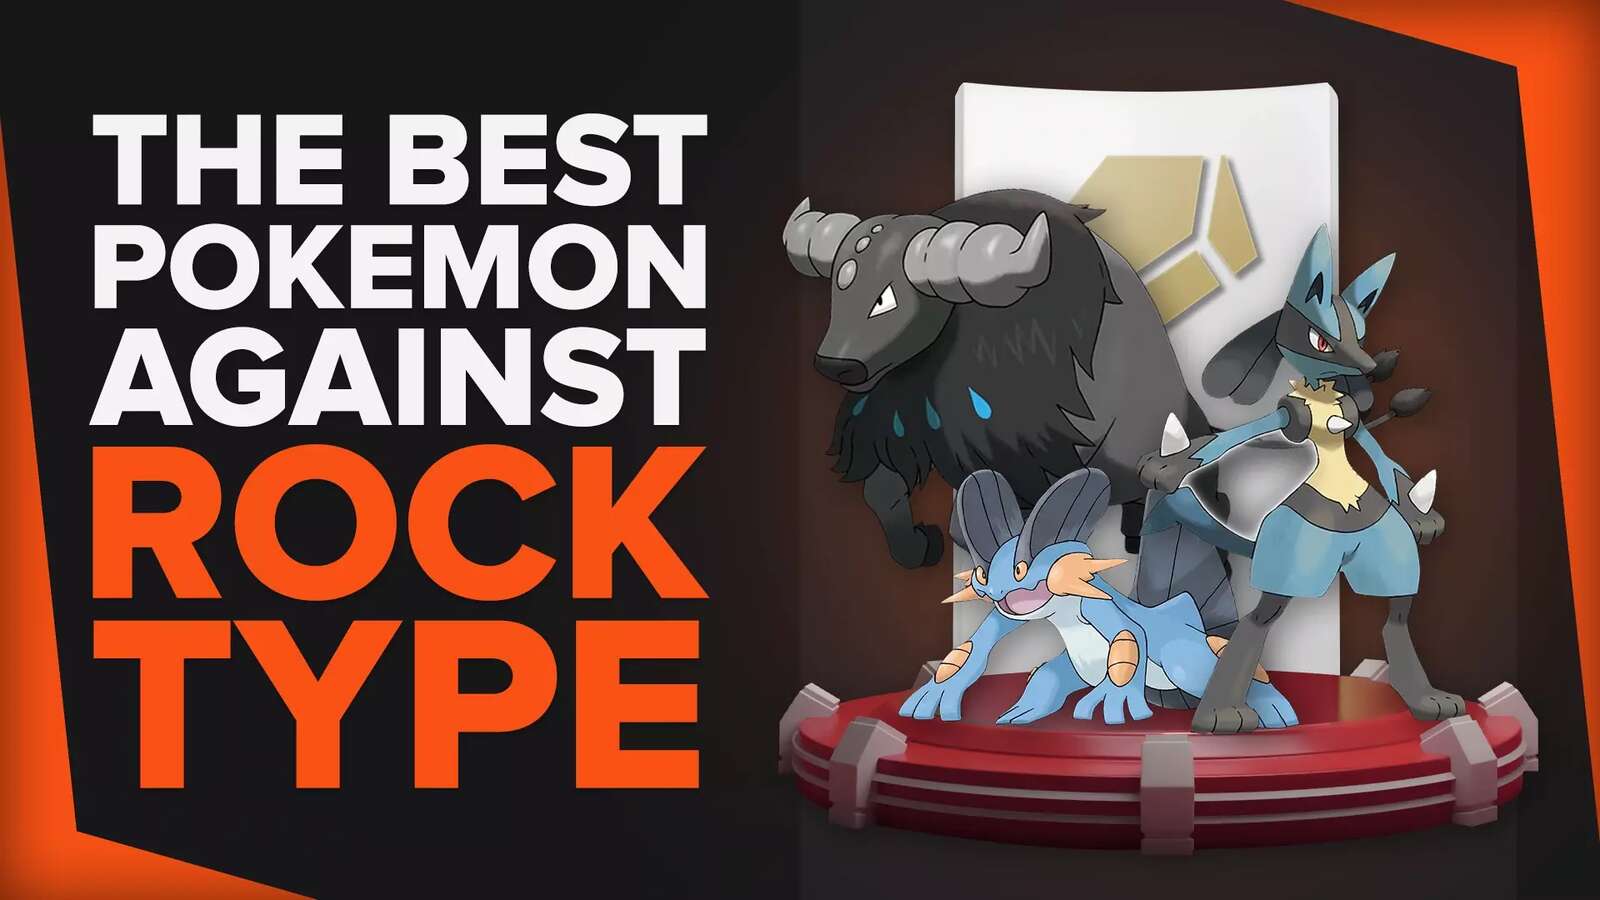 The 10 Pokemon Best Against Rock Type Pokemon [Ranked]